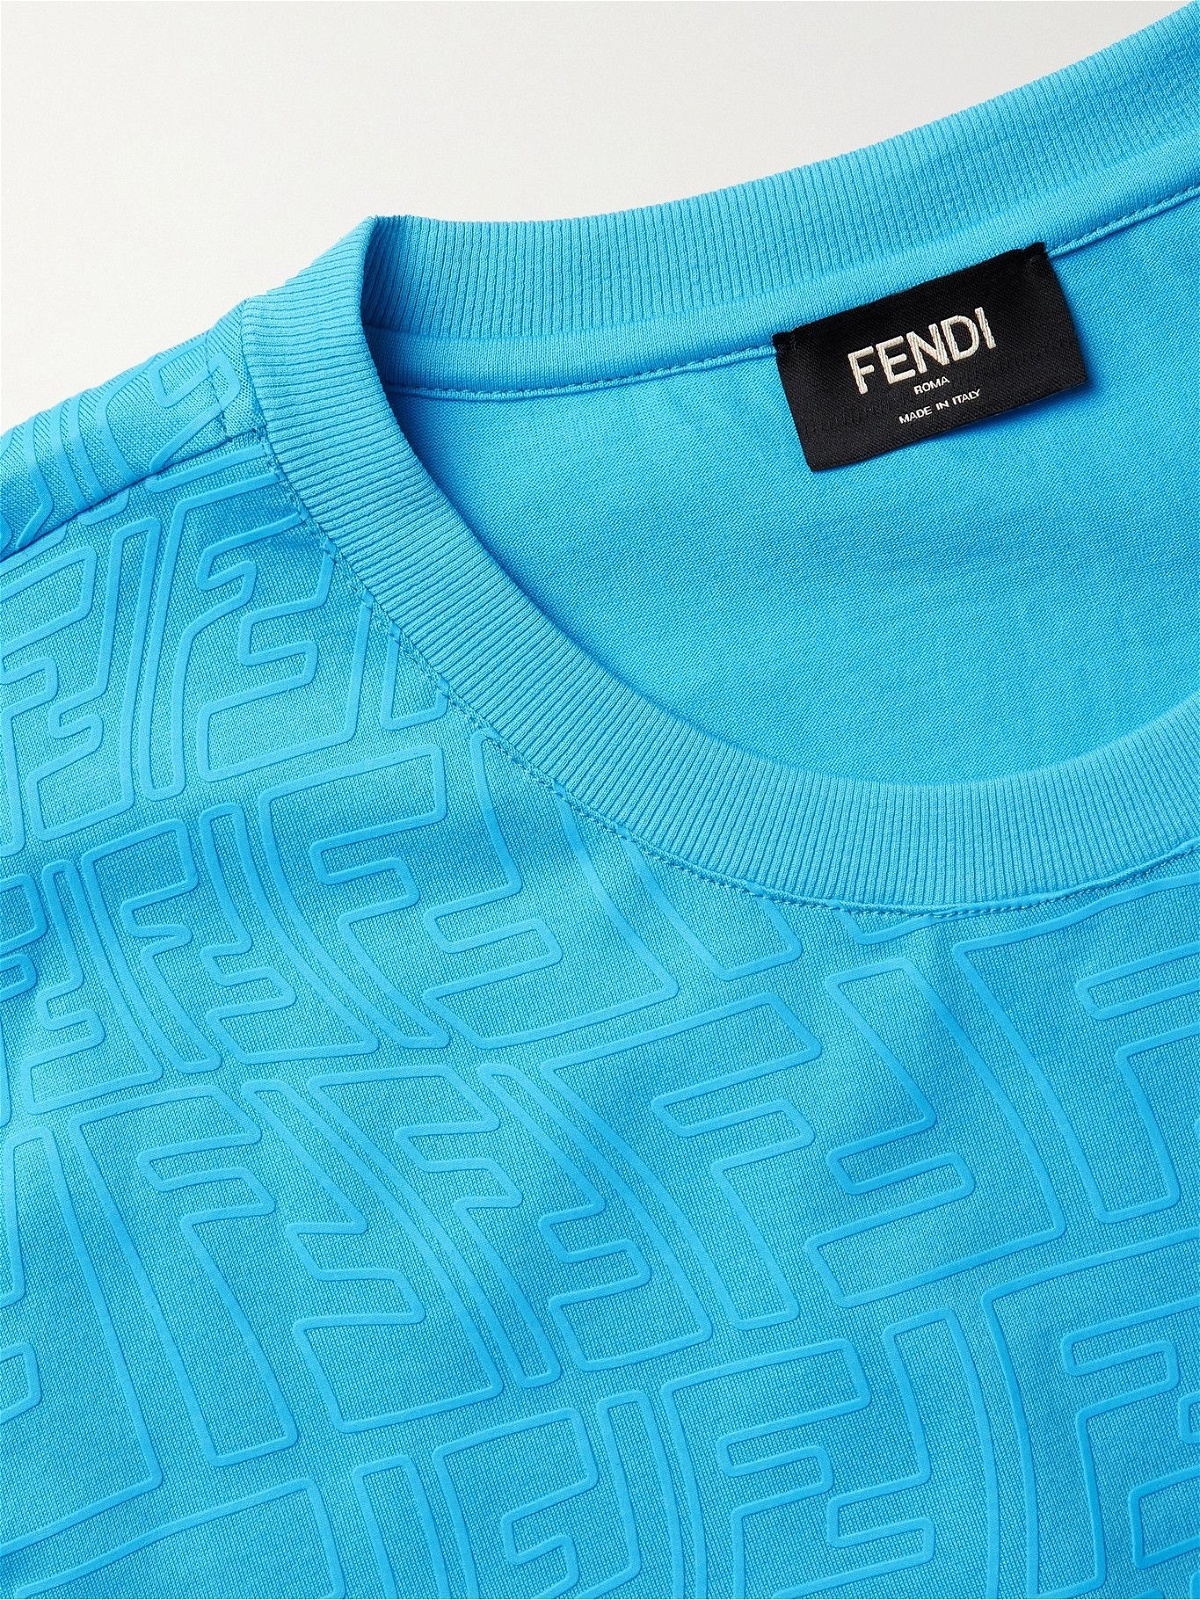 FENDI - Rubber-Printed Cotton-Jersey T-Shirt - Blue Fendi